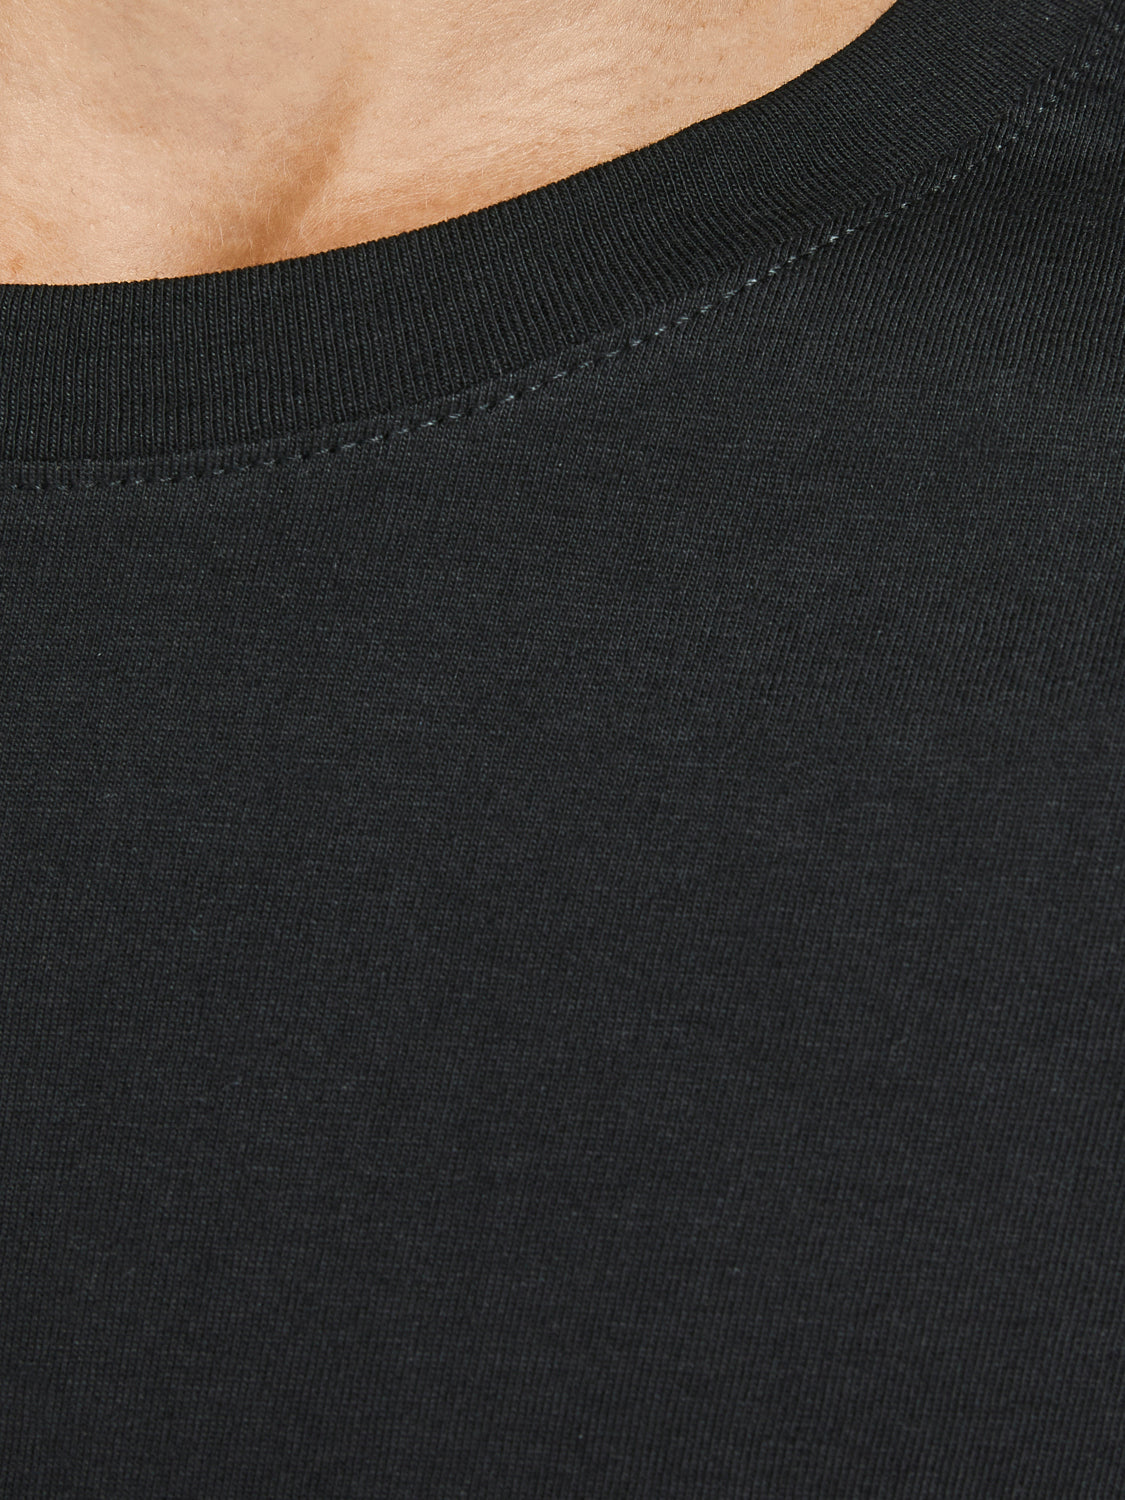 JJEORGANIC T-Shirt - Black